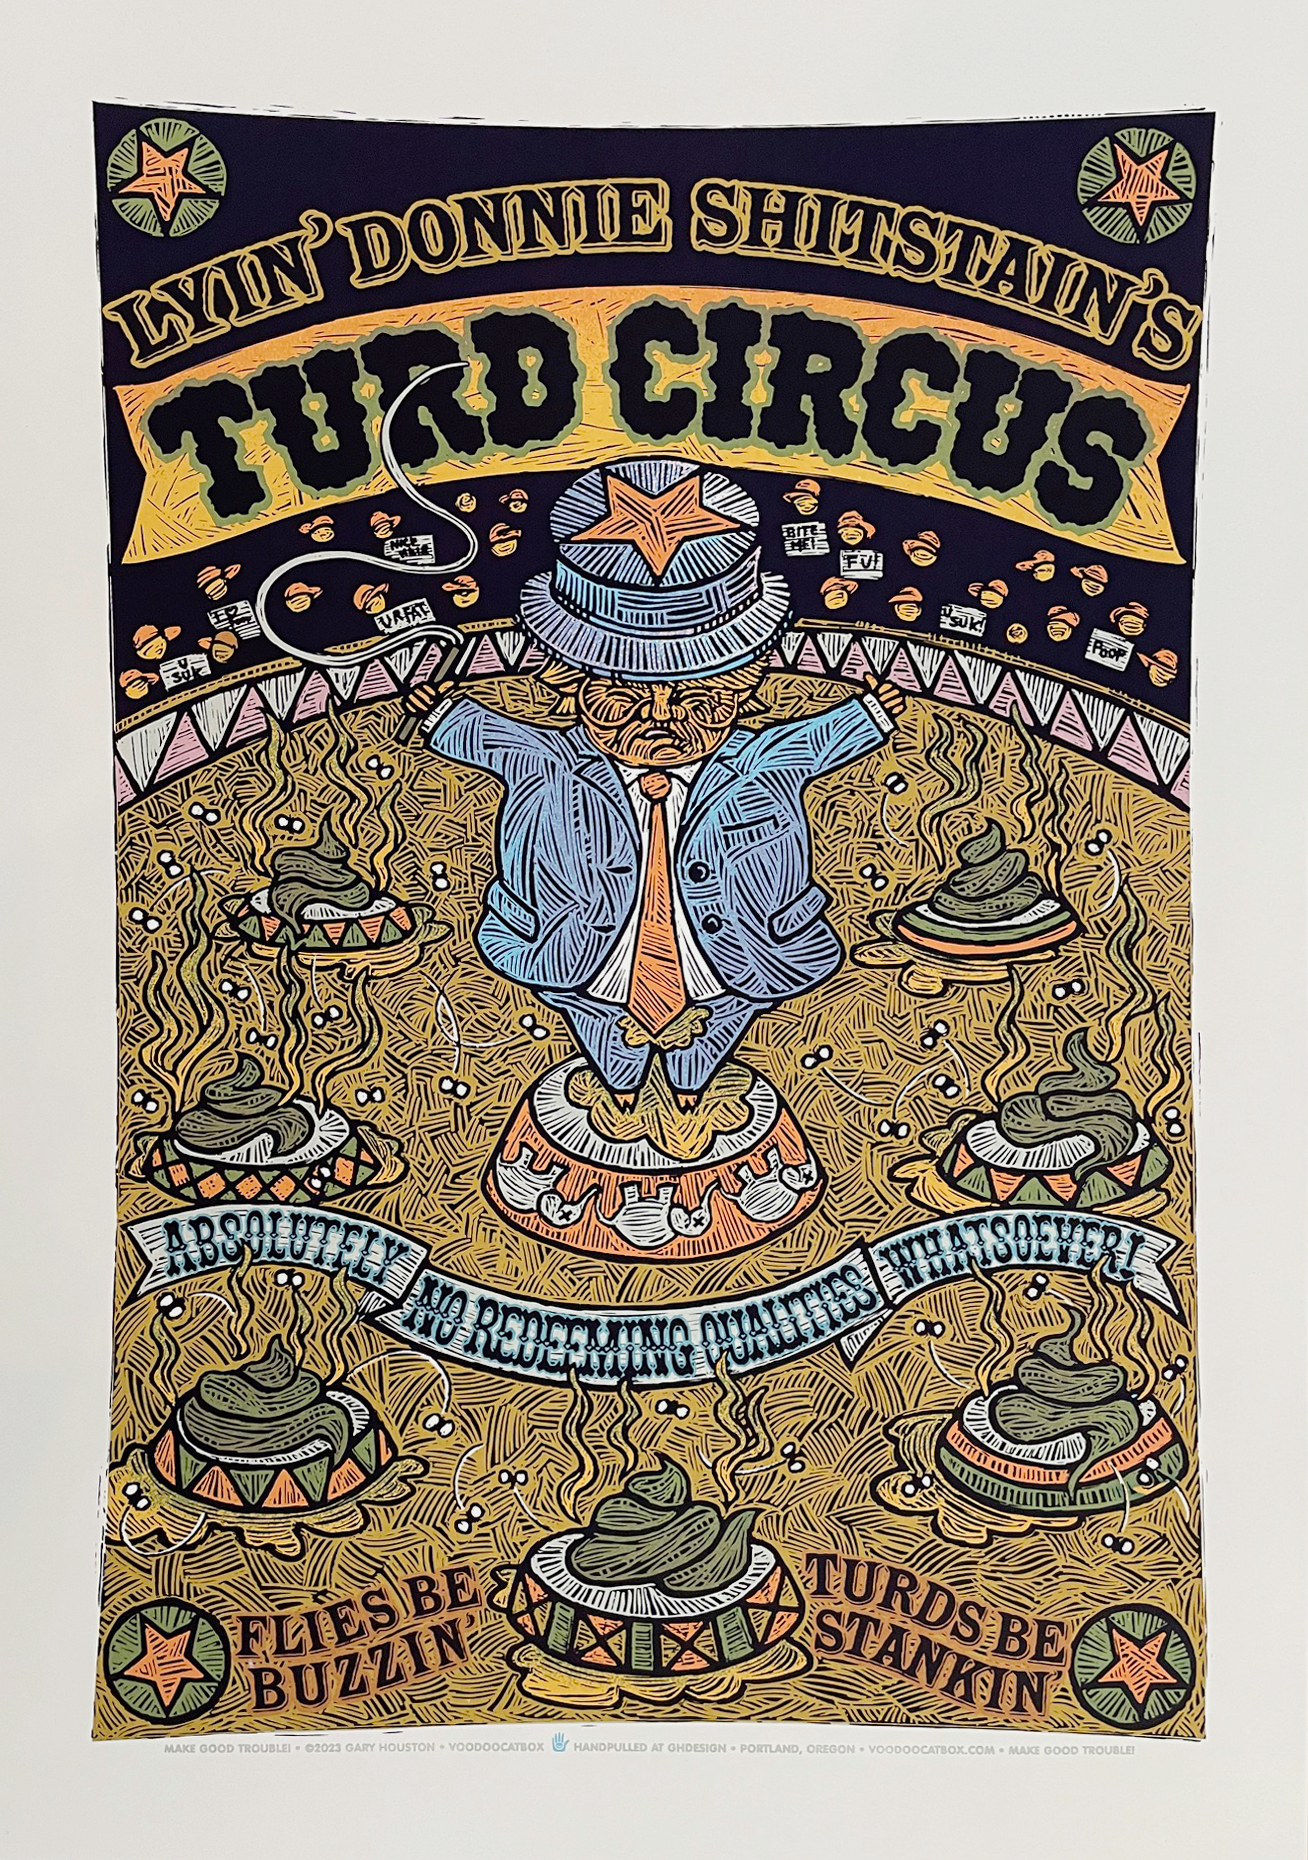 Turd Circus